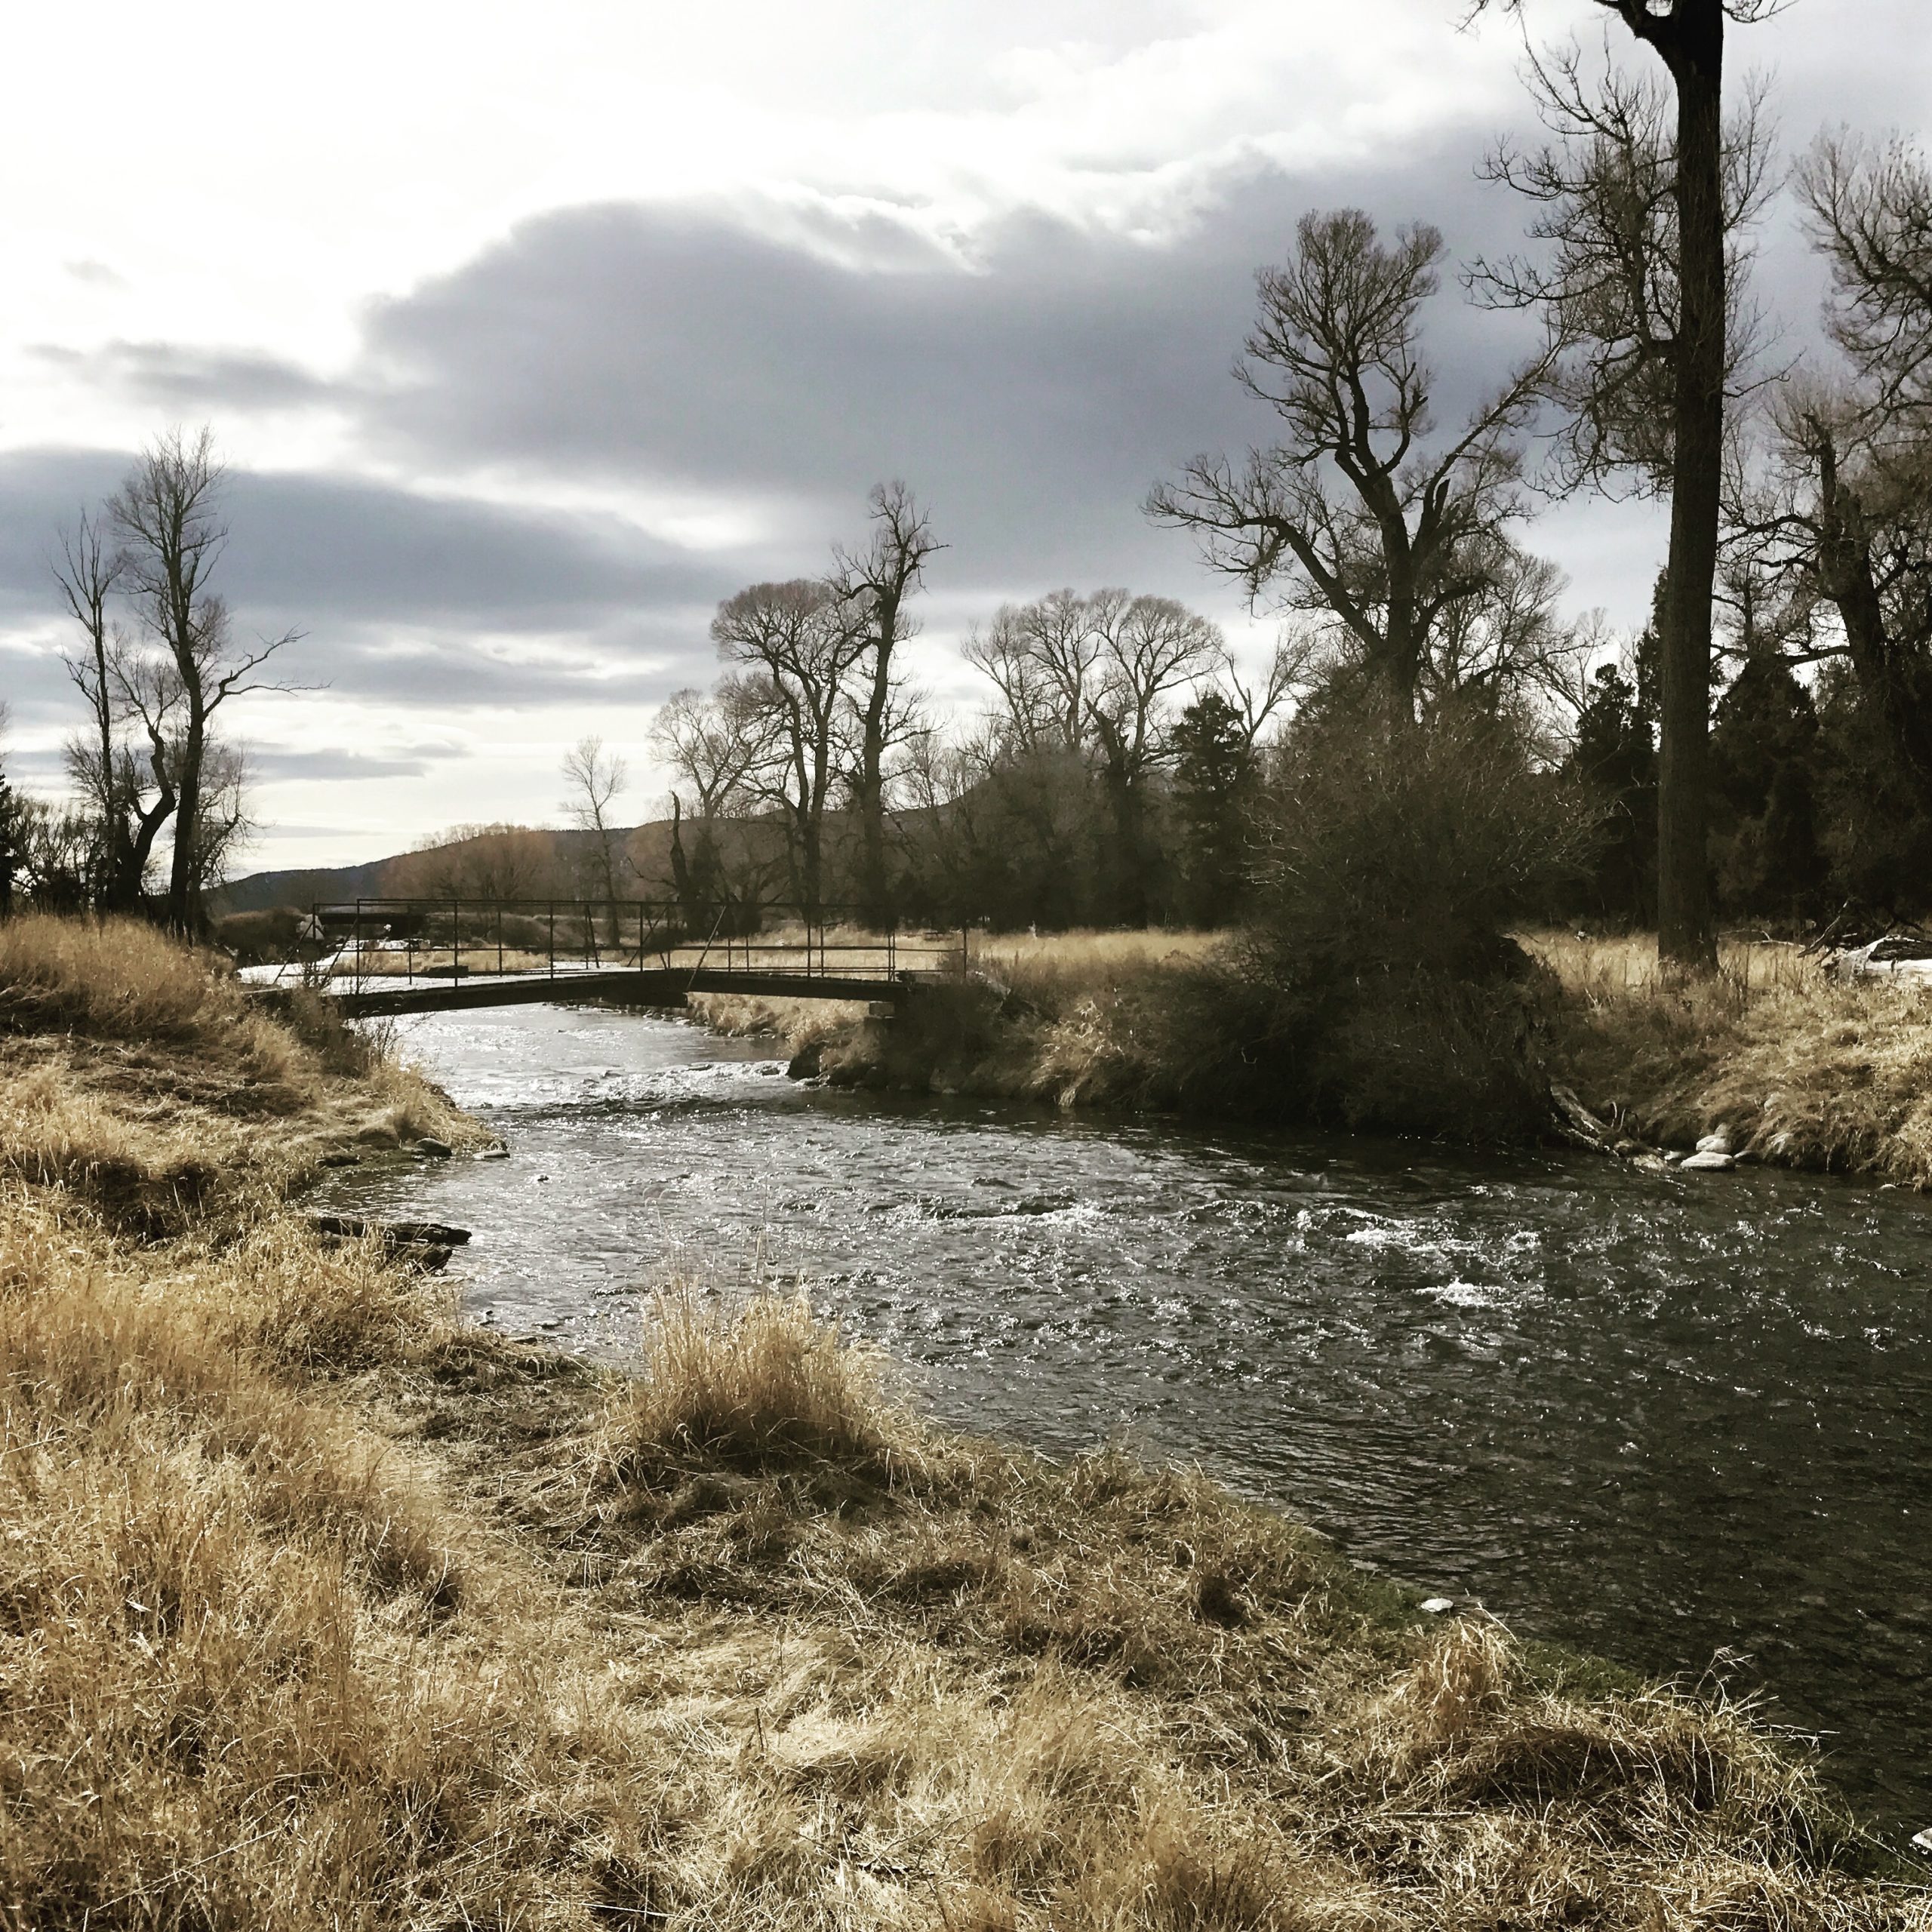 montana river in november with bridge over it